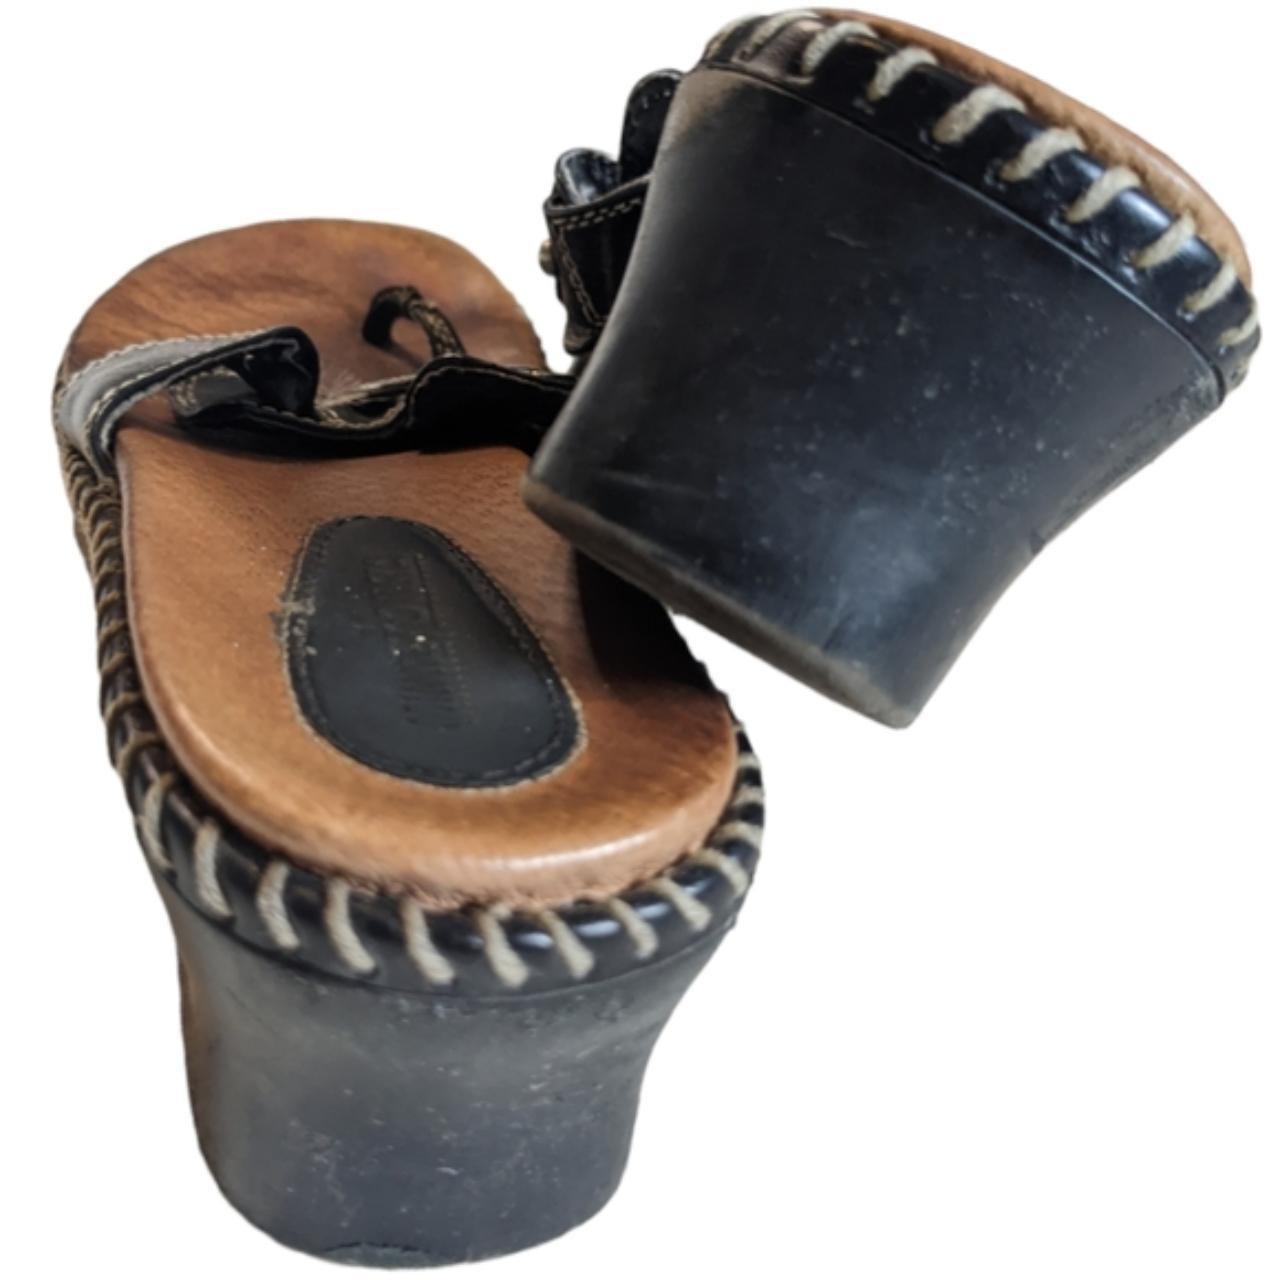 Product Image 2 - Minnetonka Boho Wedge Heel Sandal

Super